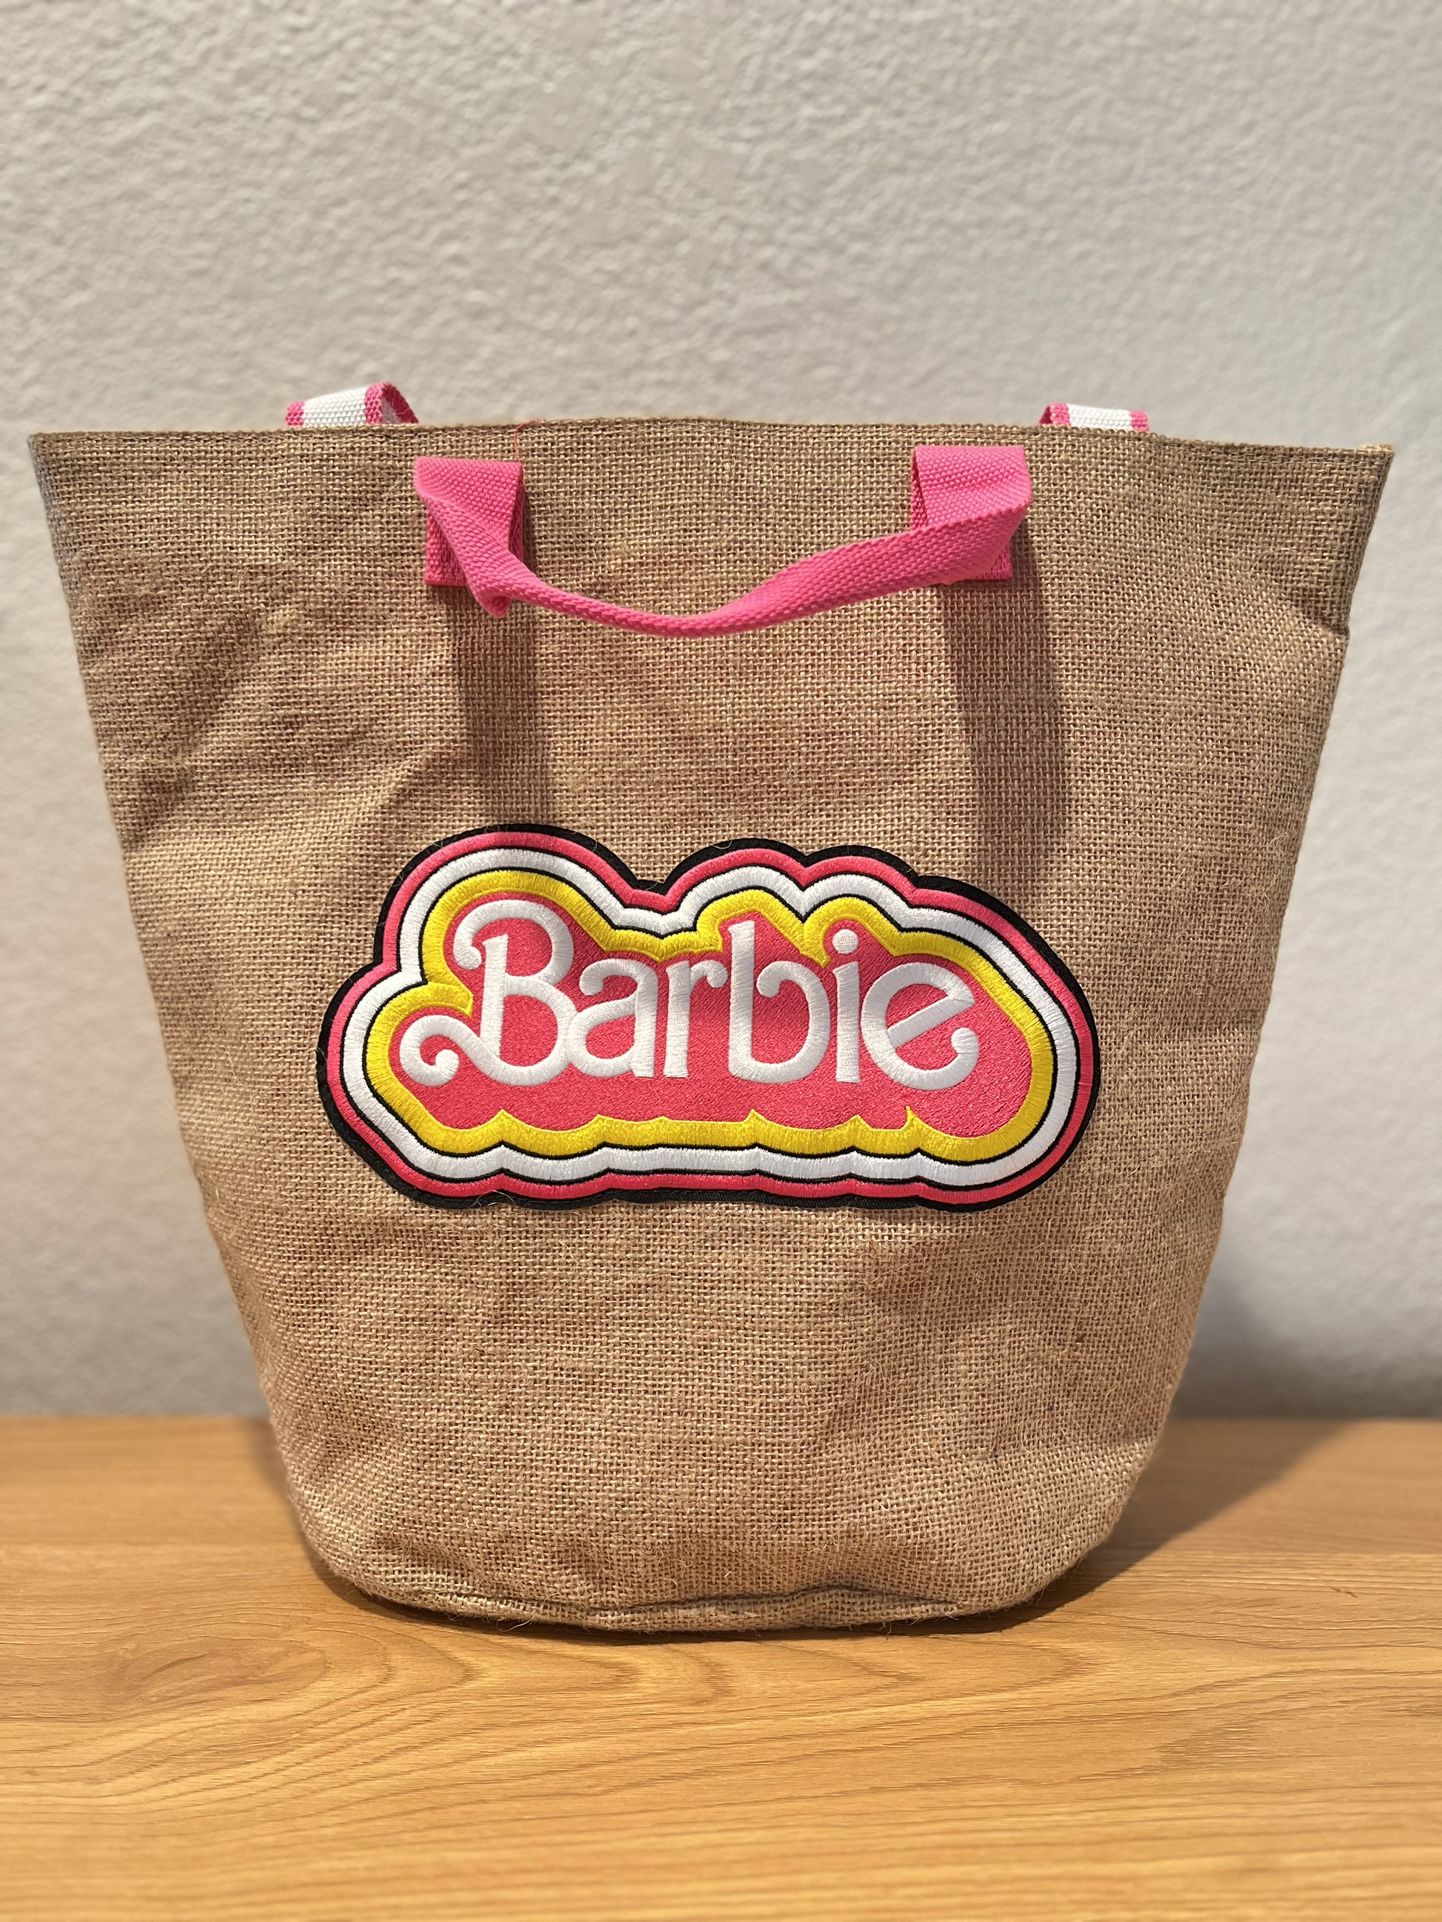 Barbie Two-way Burlap | Beach | Straw Tote Bag - Brand New wo Tags